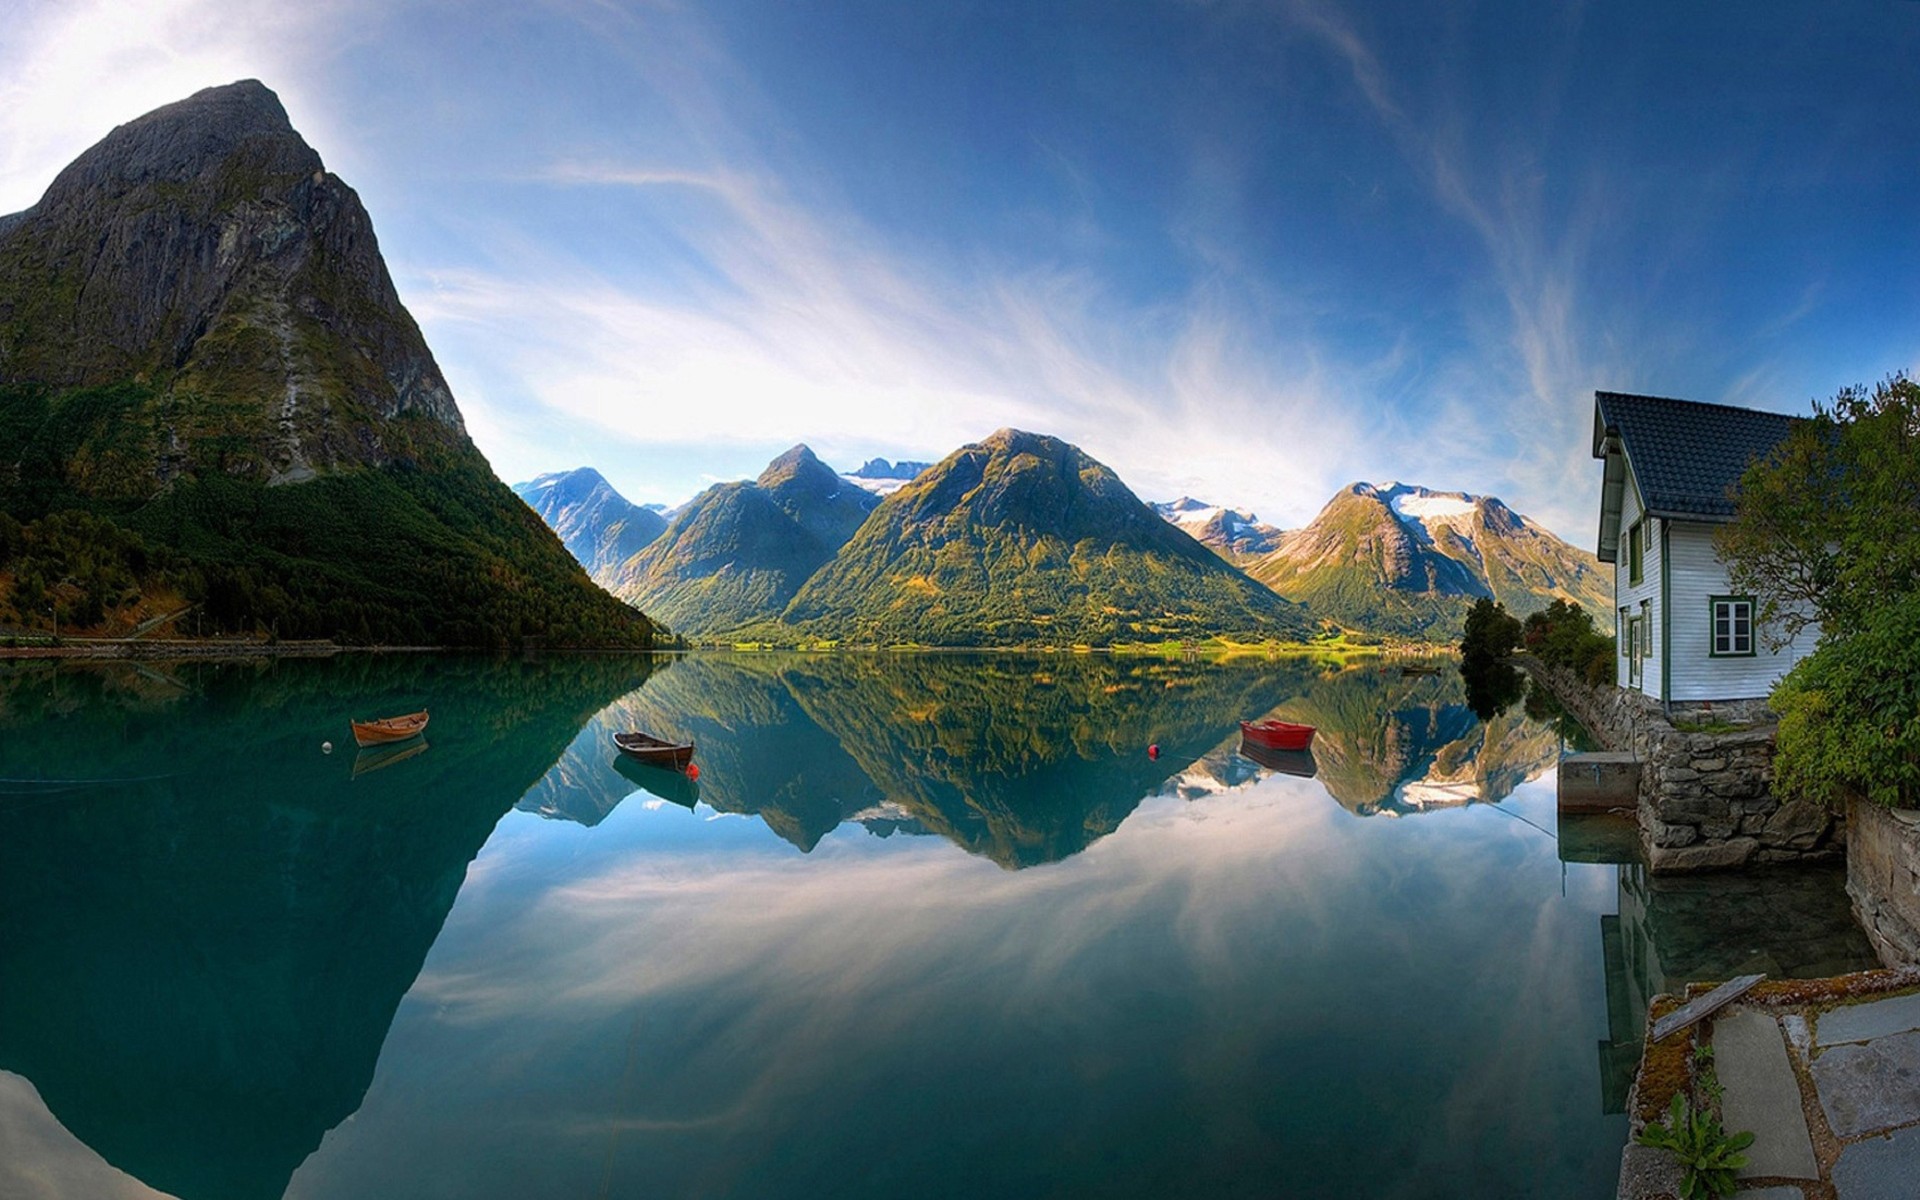 mountains, landscapes, nature, reflections - desktop wallpaper